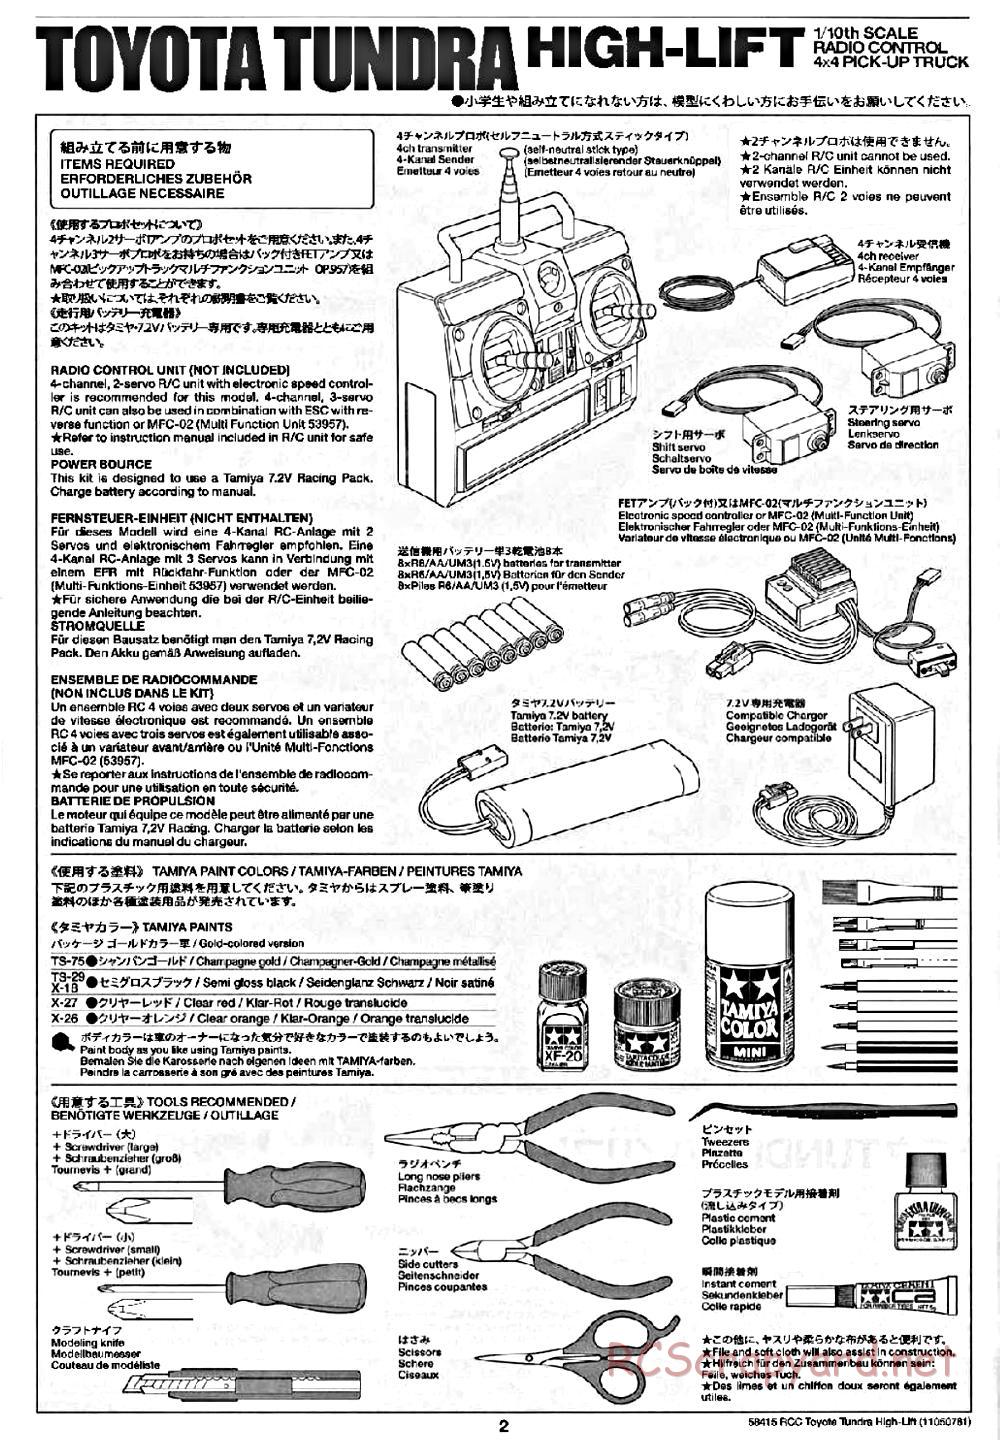 Tamiya - Toyota Tundra High-Lift Chassis - Manual - Page 2